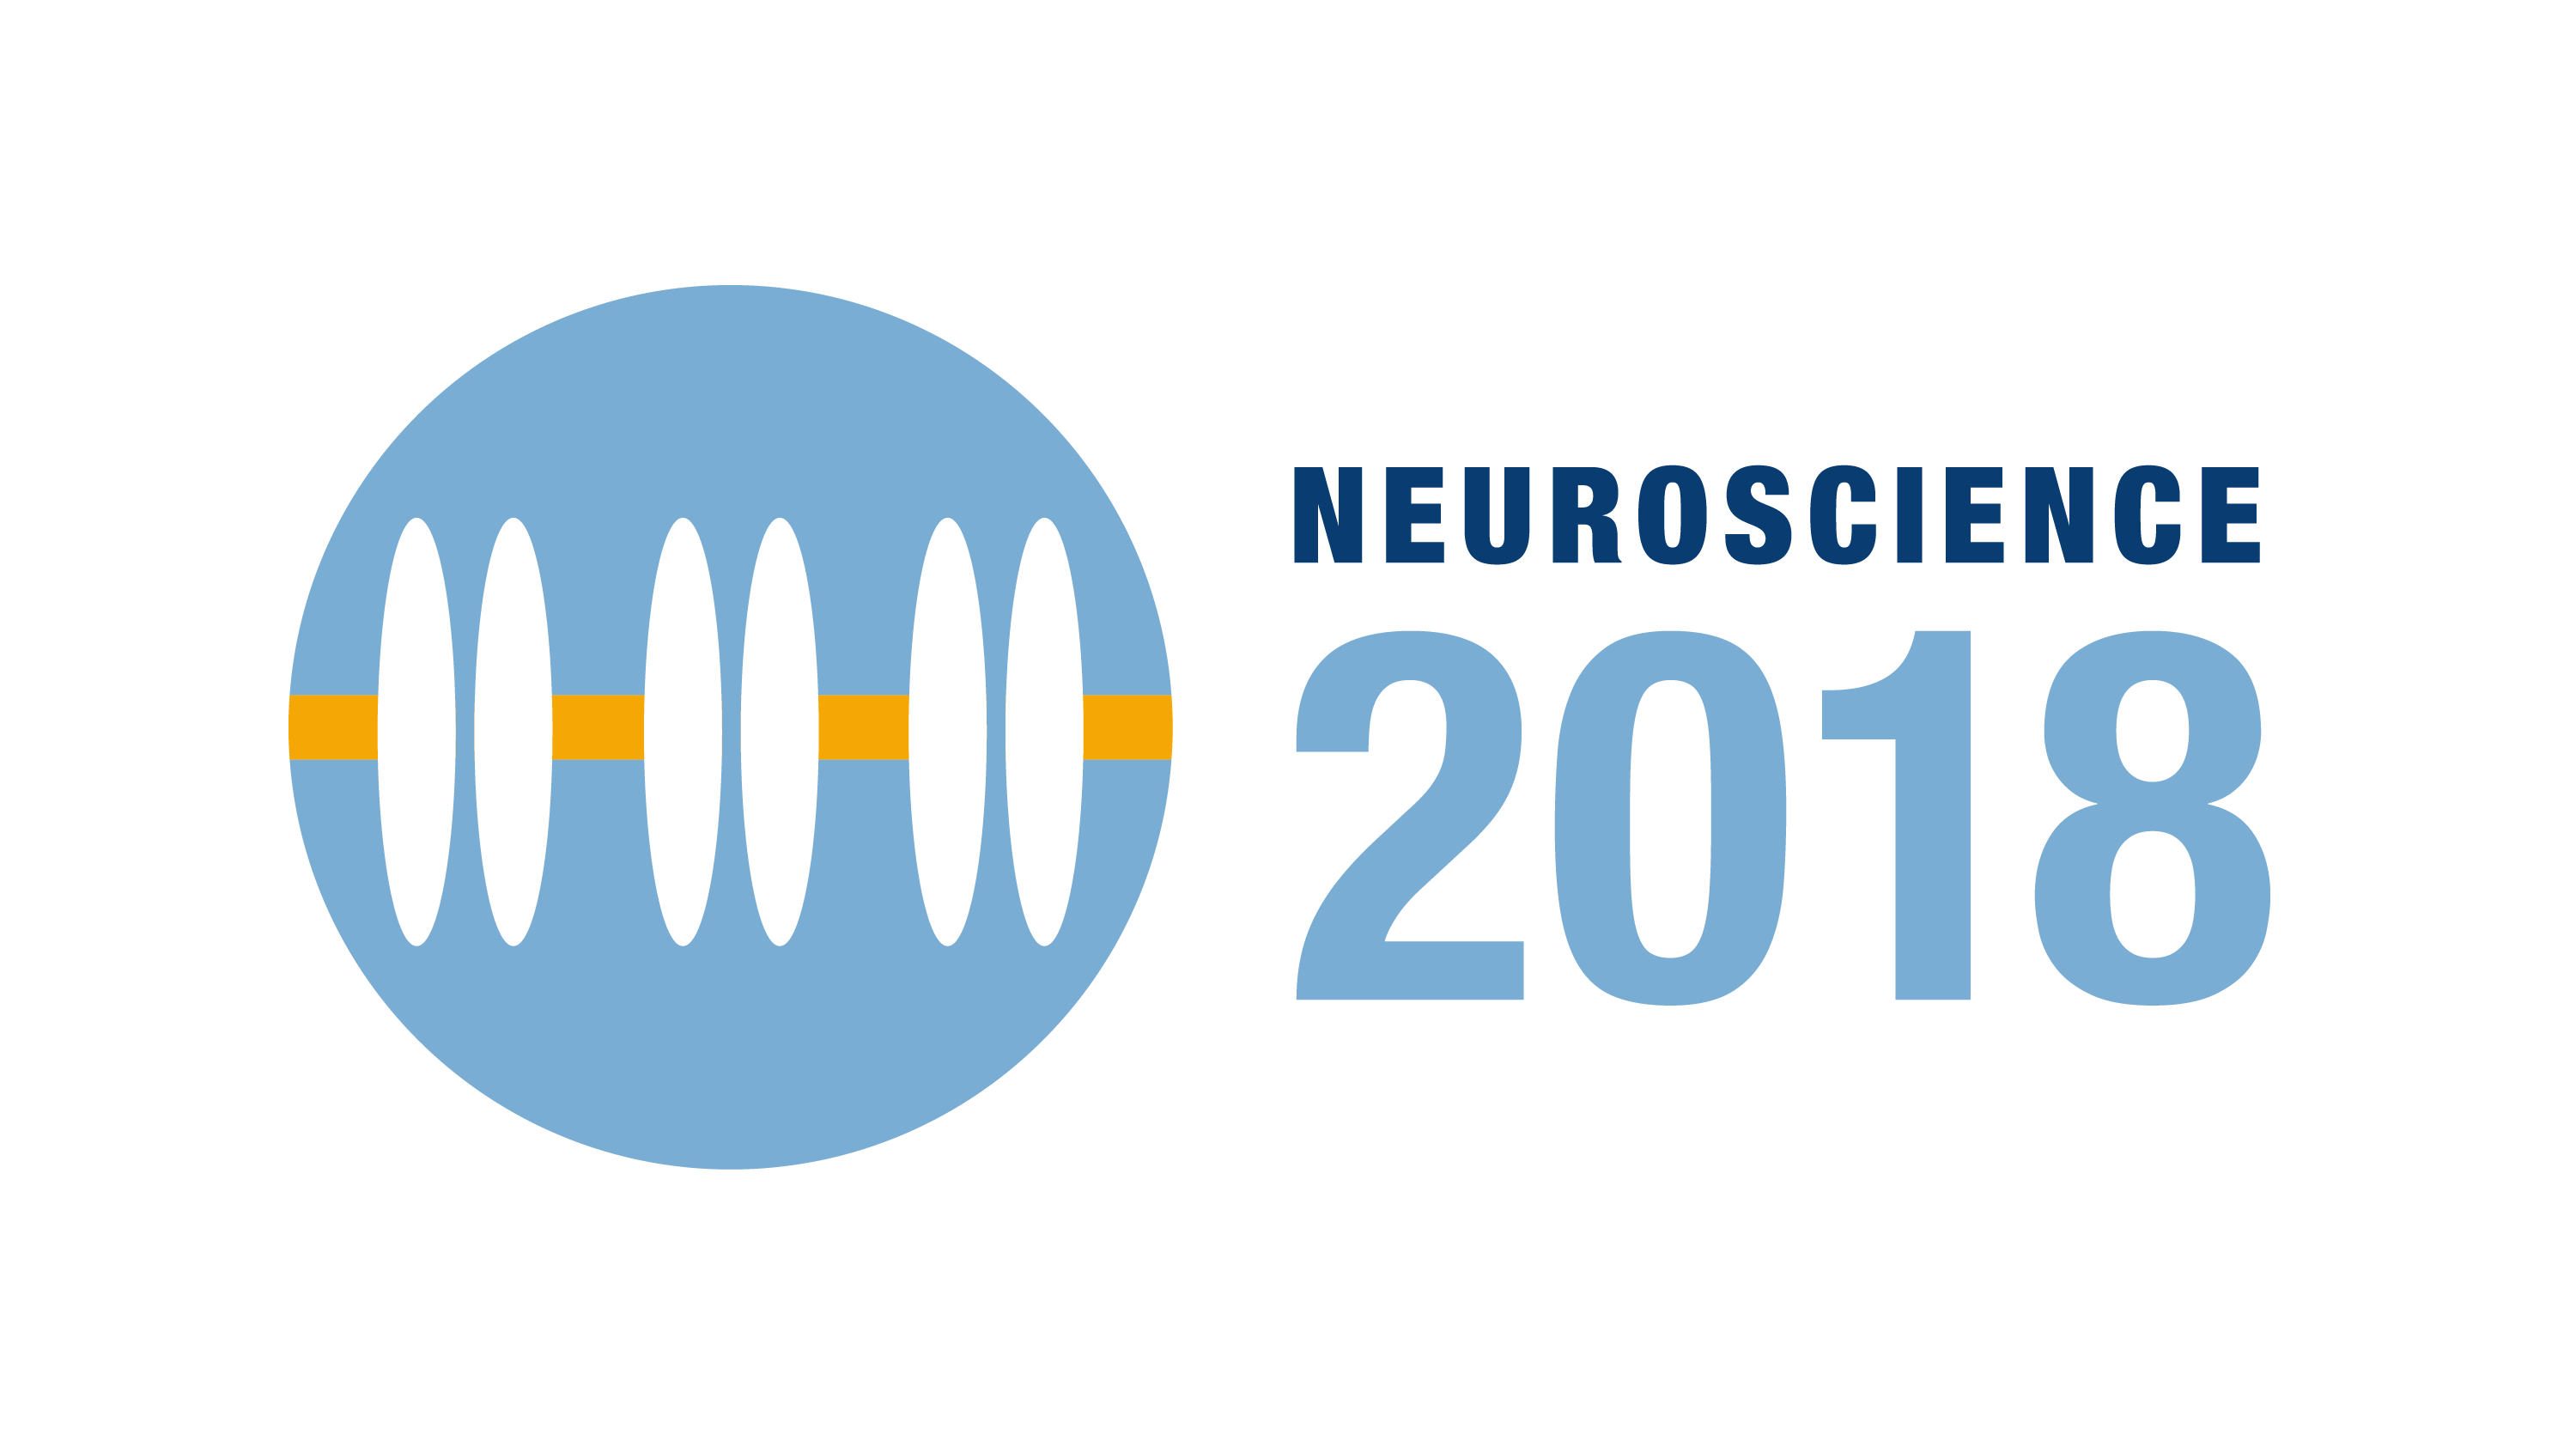 Neuroscience Logo - Society for Neuroscience and Future Annual Meetings